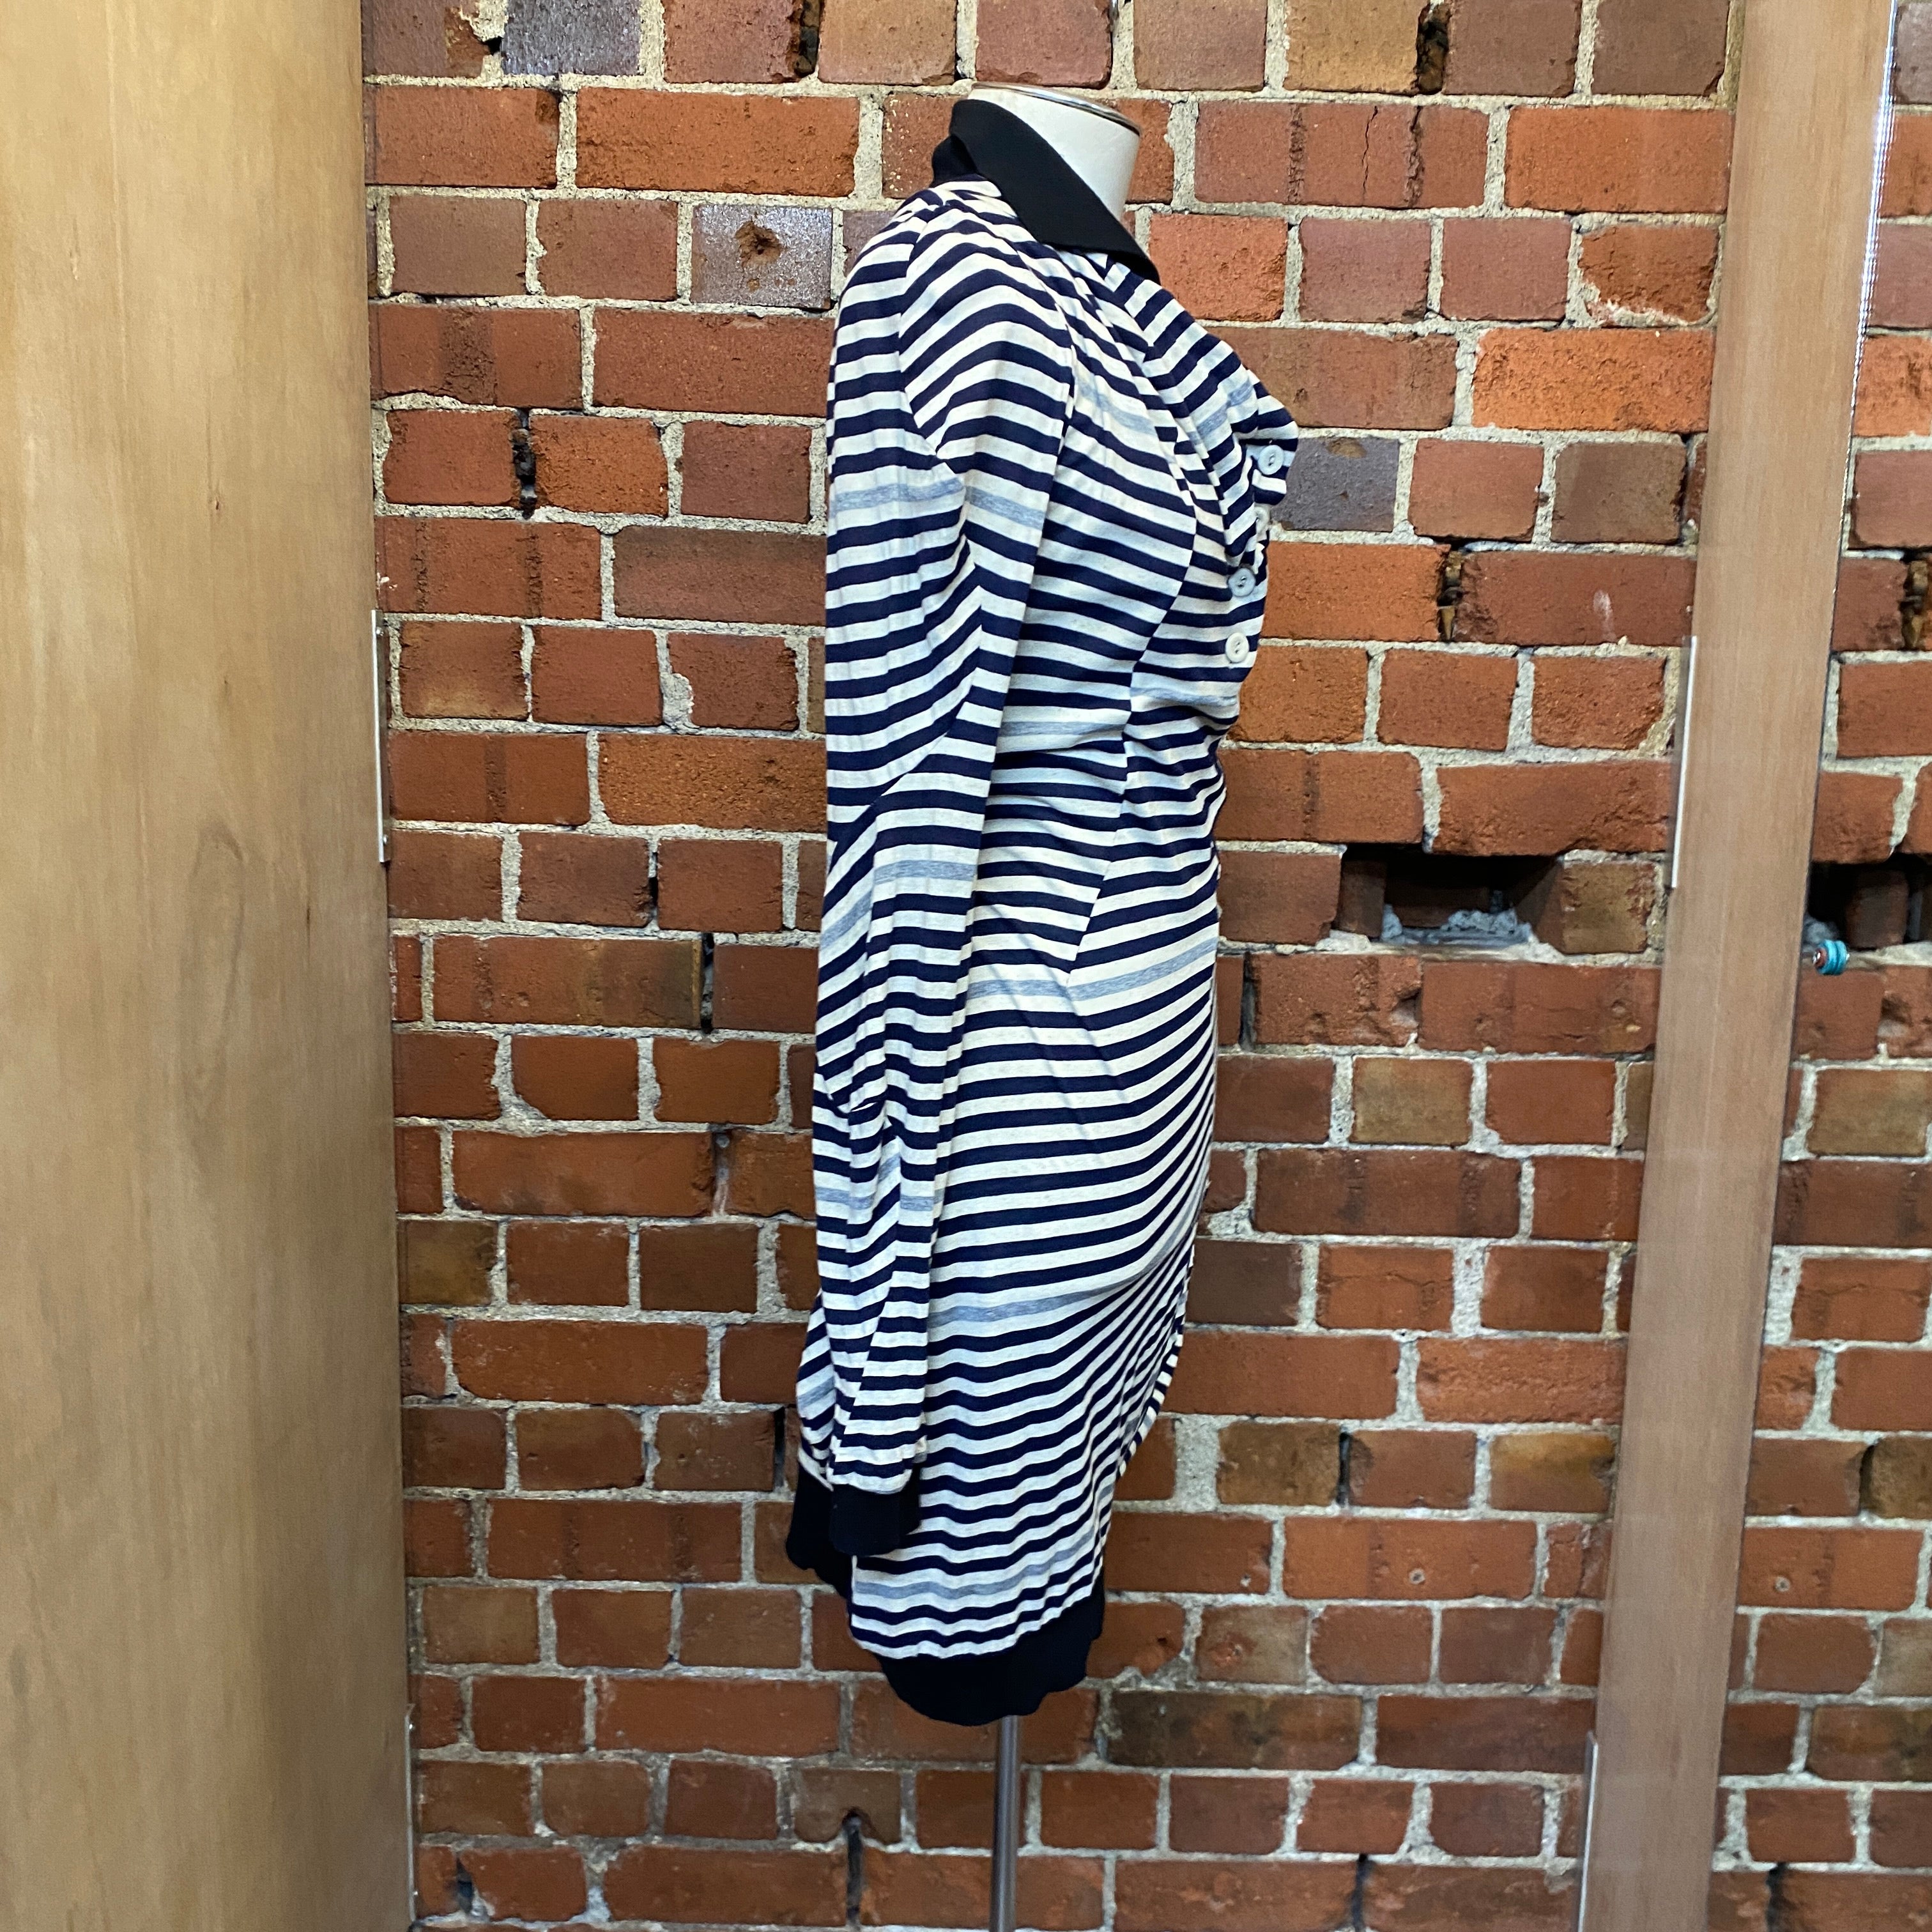 VIVIENNE WESTWOOD Anglomania 1990s 'Drunen Tailor' striped dress